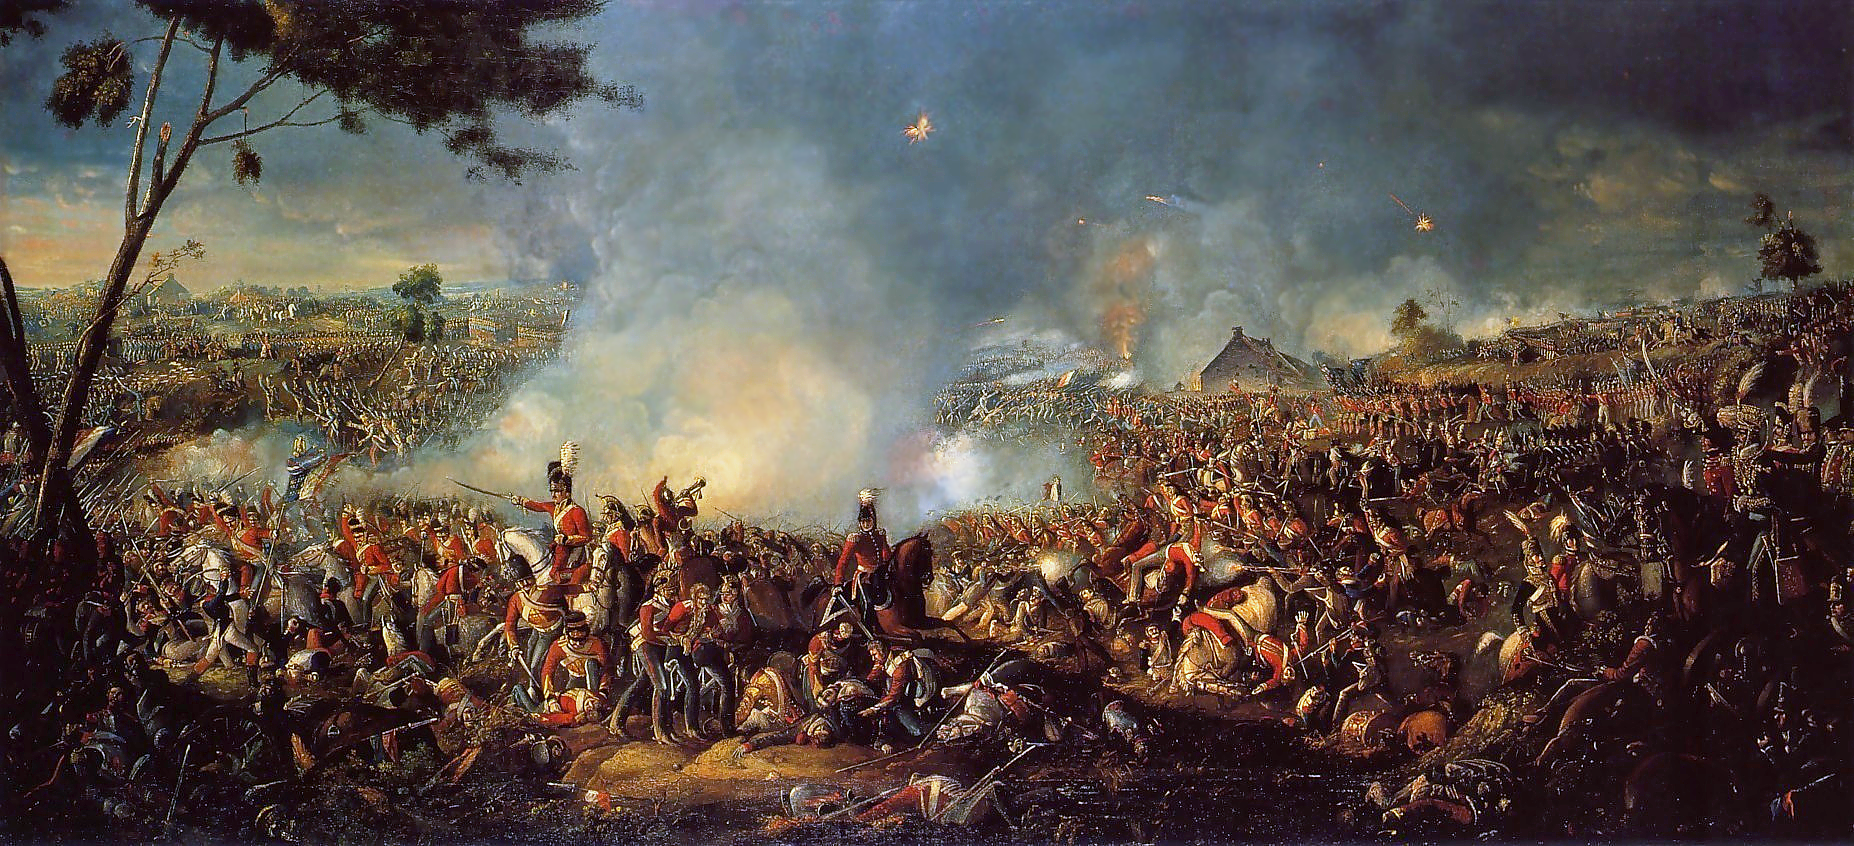 Картина Уильяма Сэдлера «Битва при Ватерлоо». 1815 год. Галерея Пимс в Лондоне. 